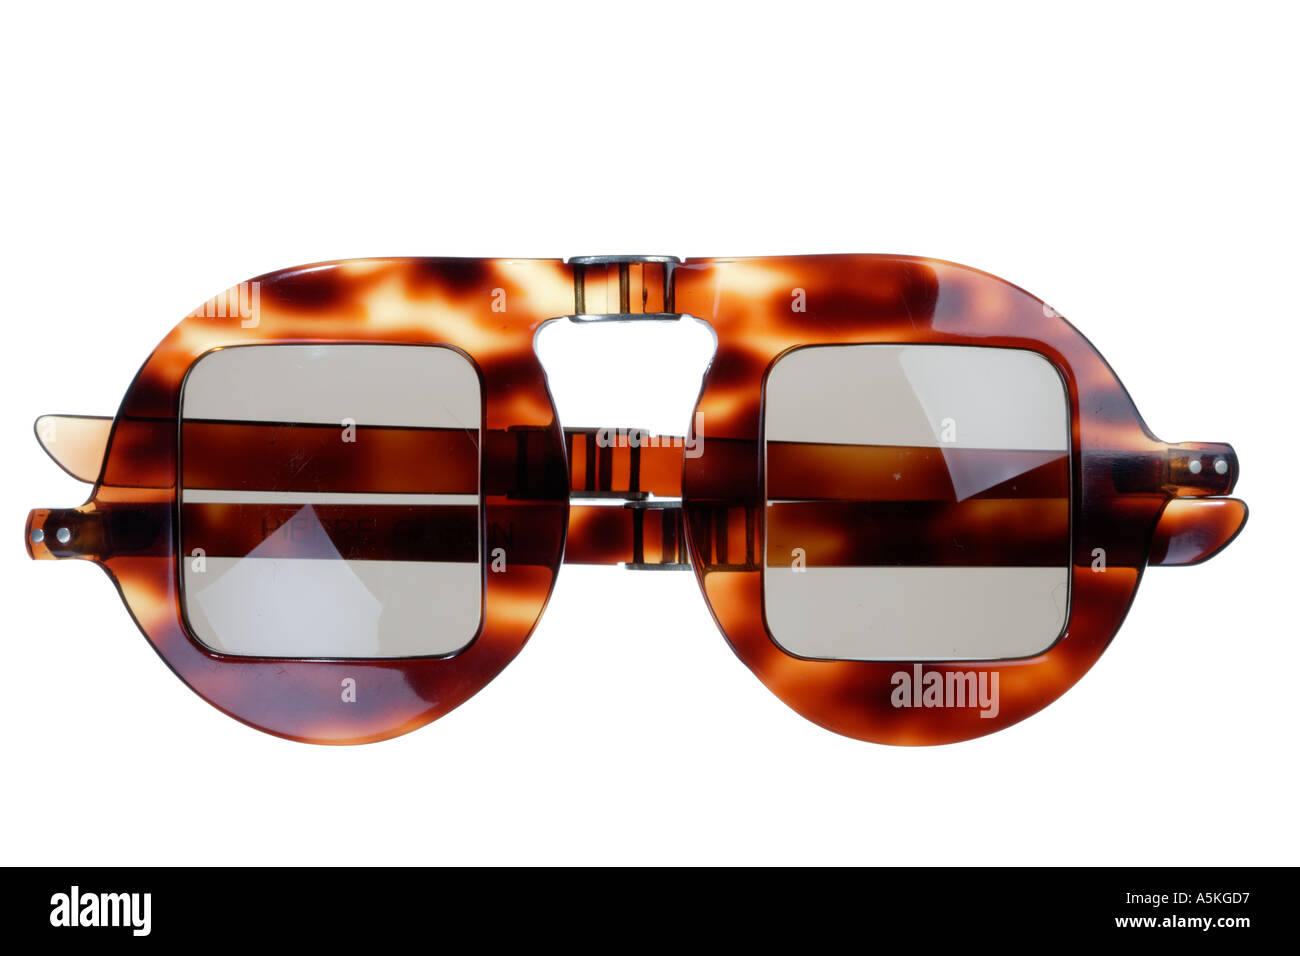 Pierre Cardin folding sunglasses Stock Photo - Alamy